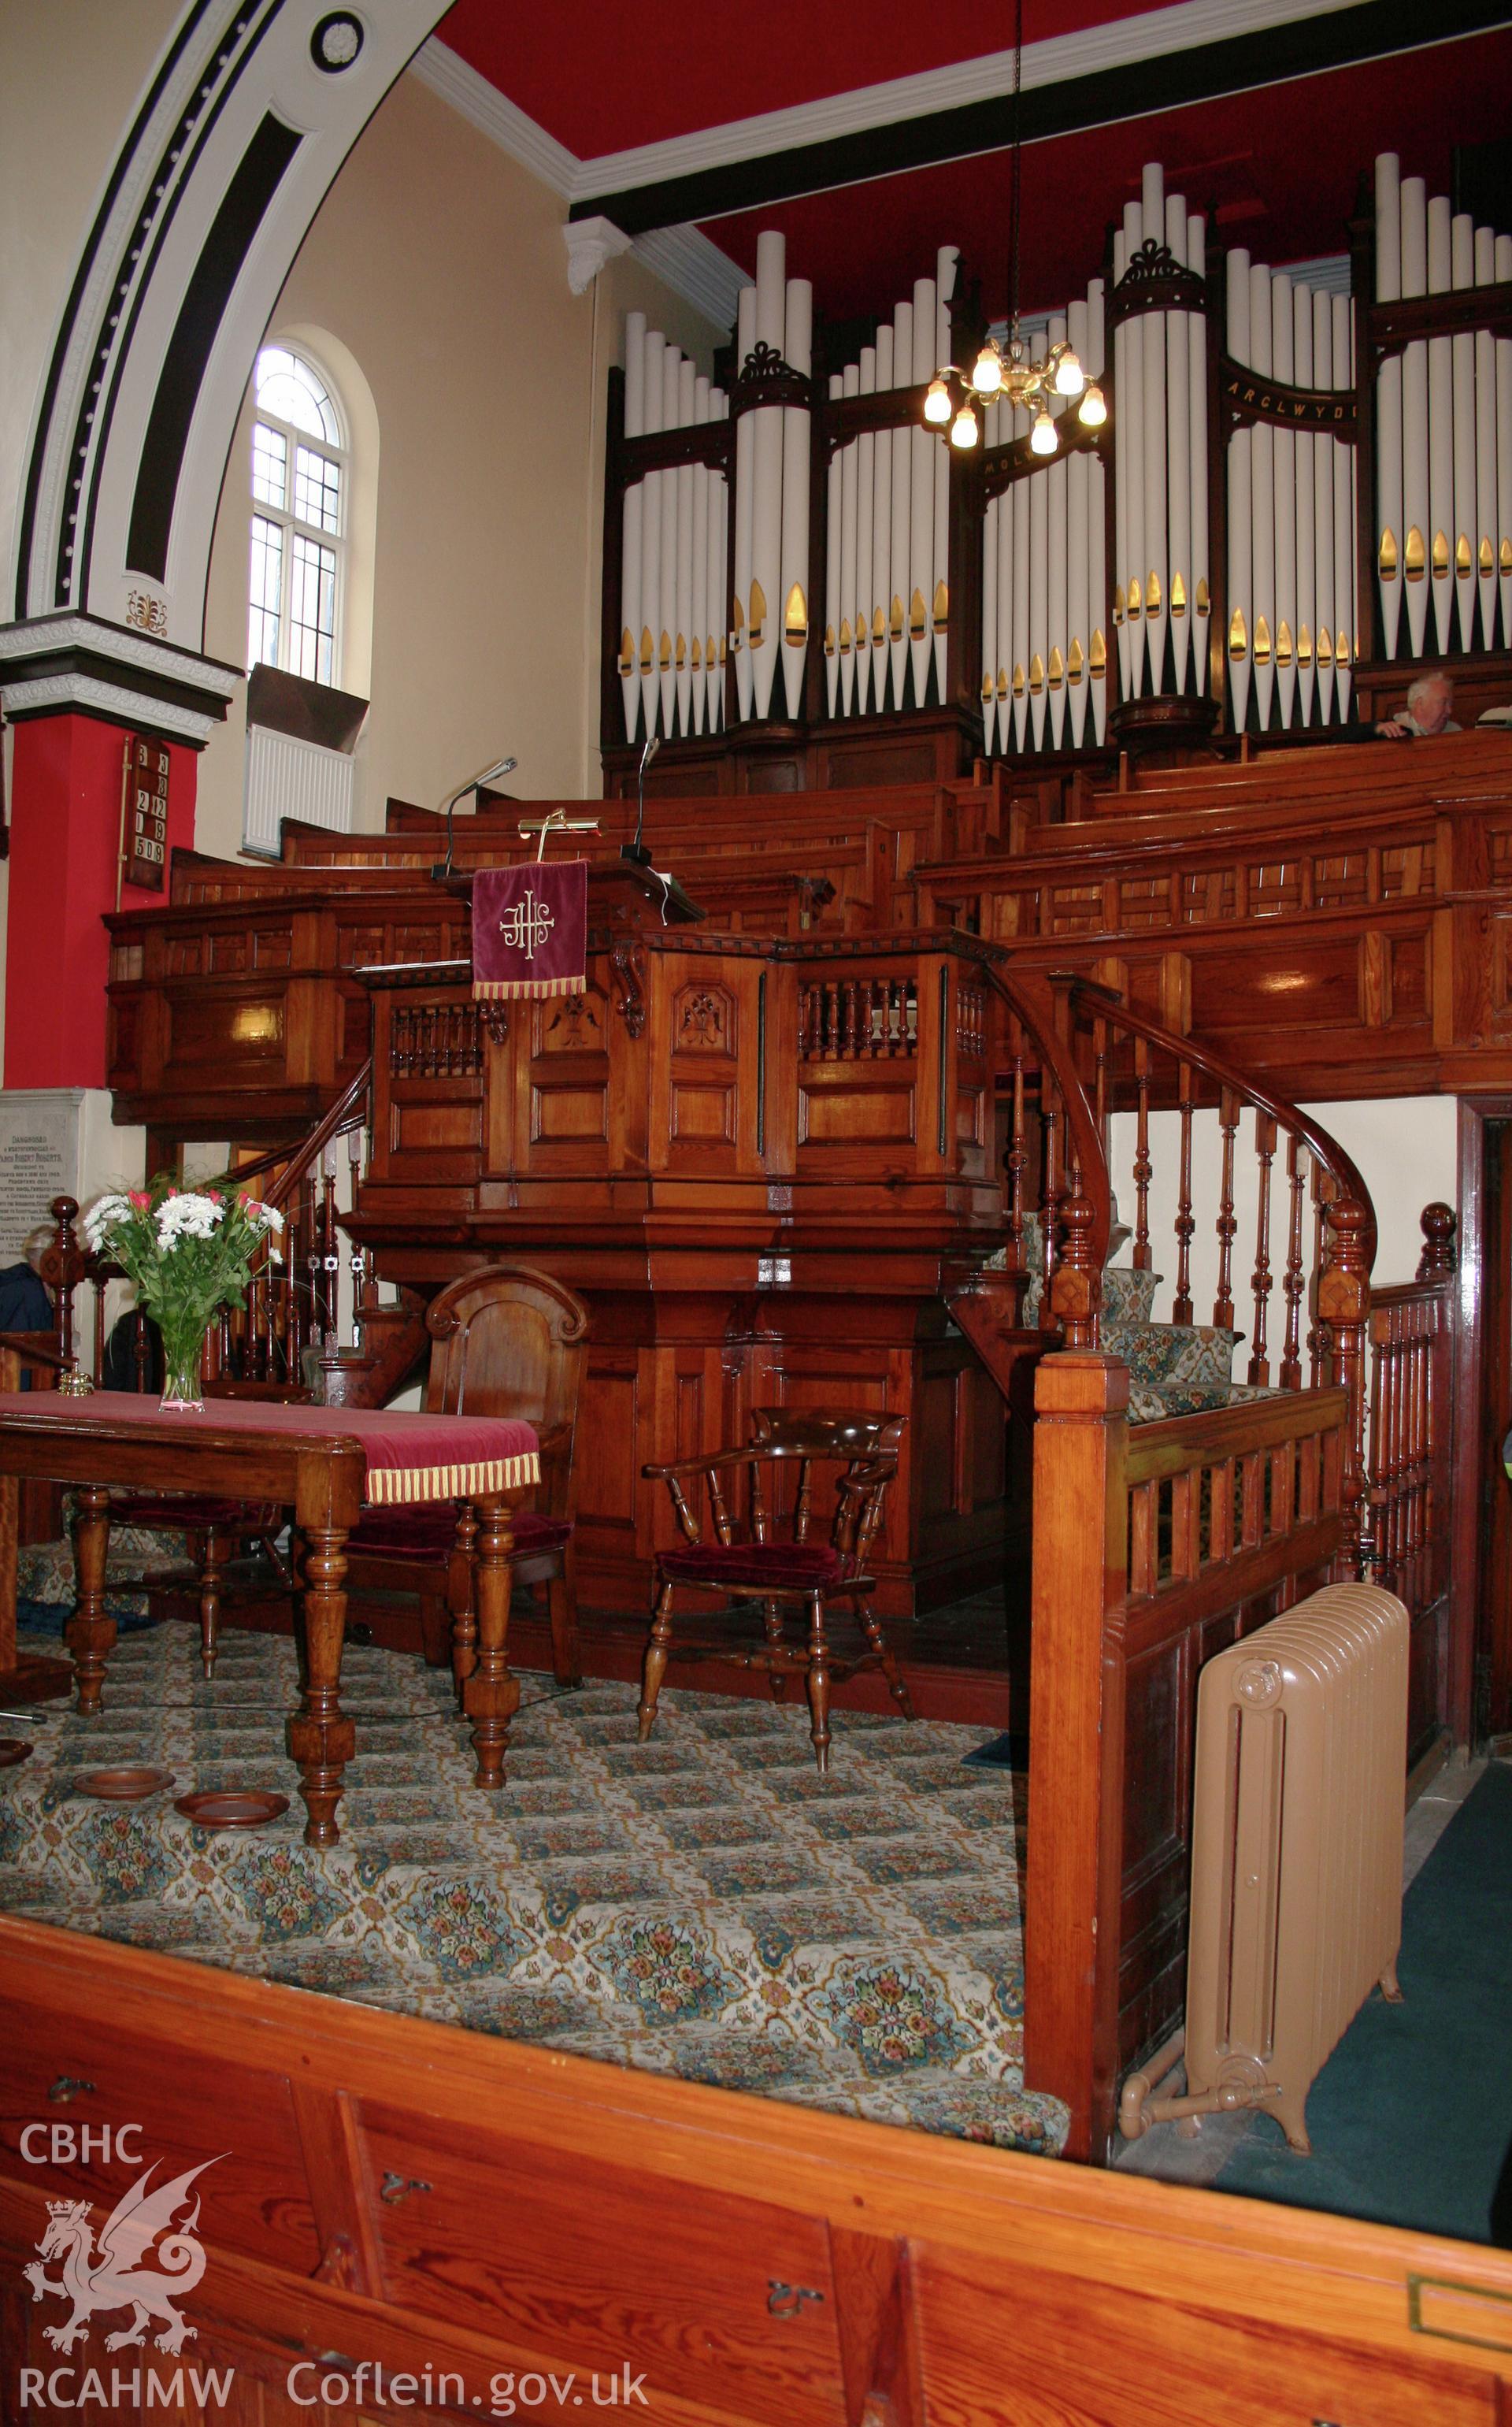 Interior, pulpit & organ